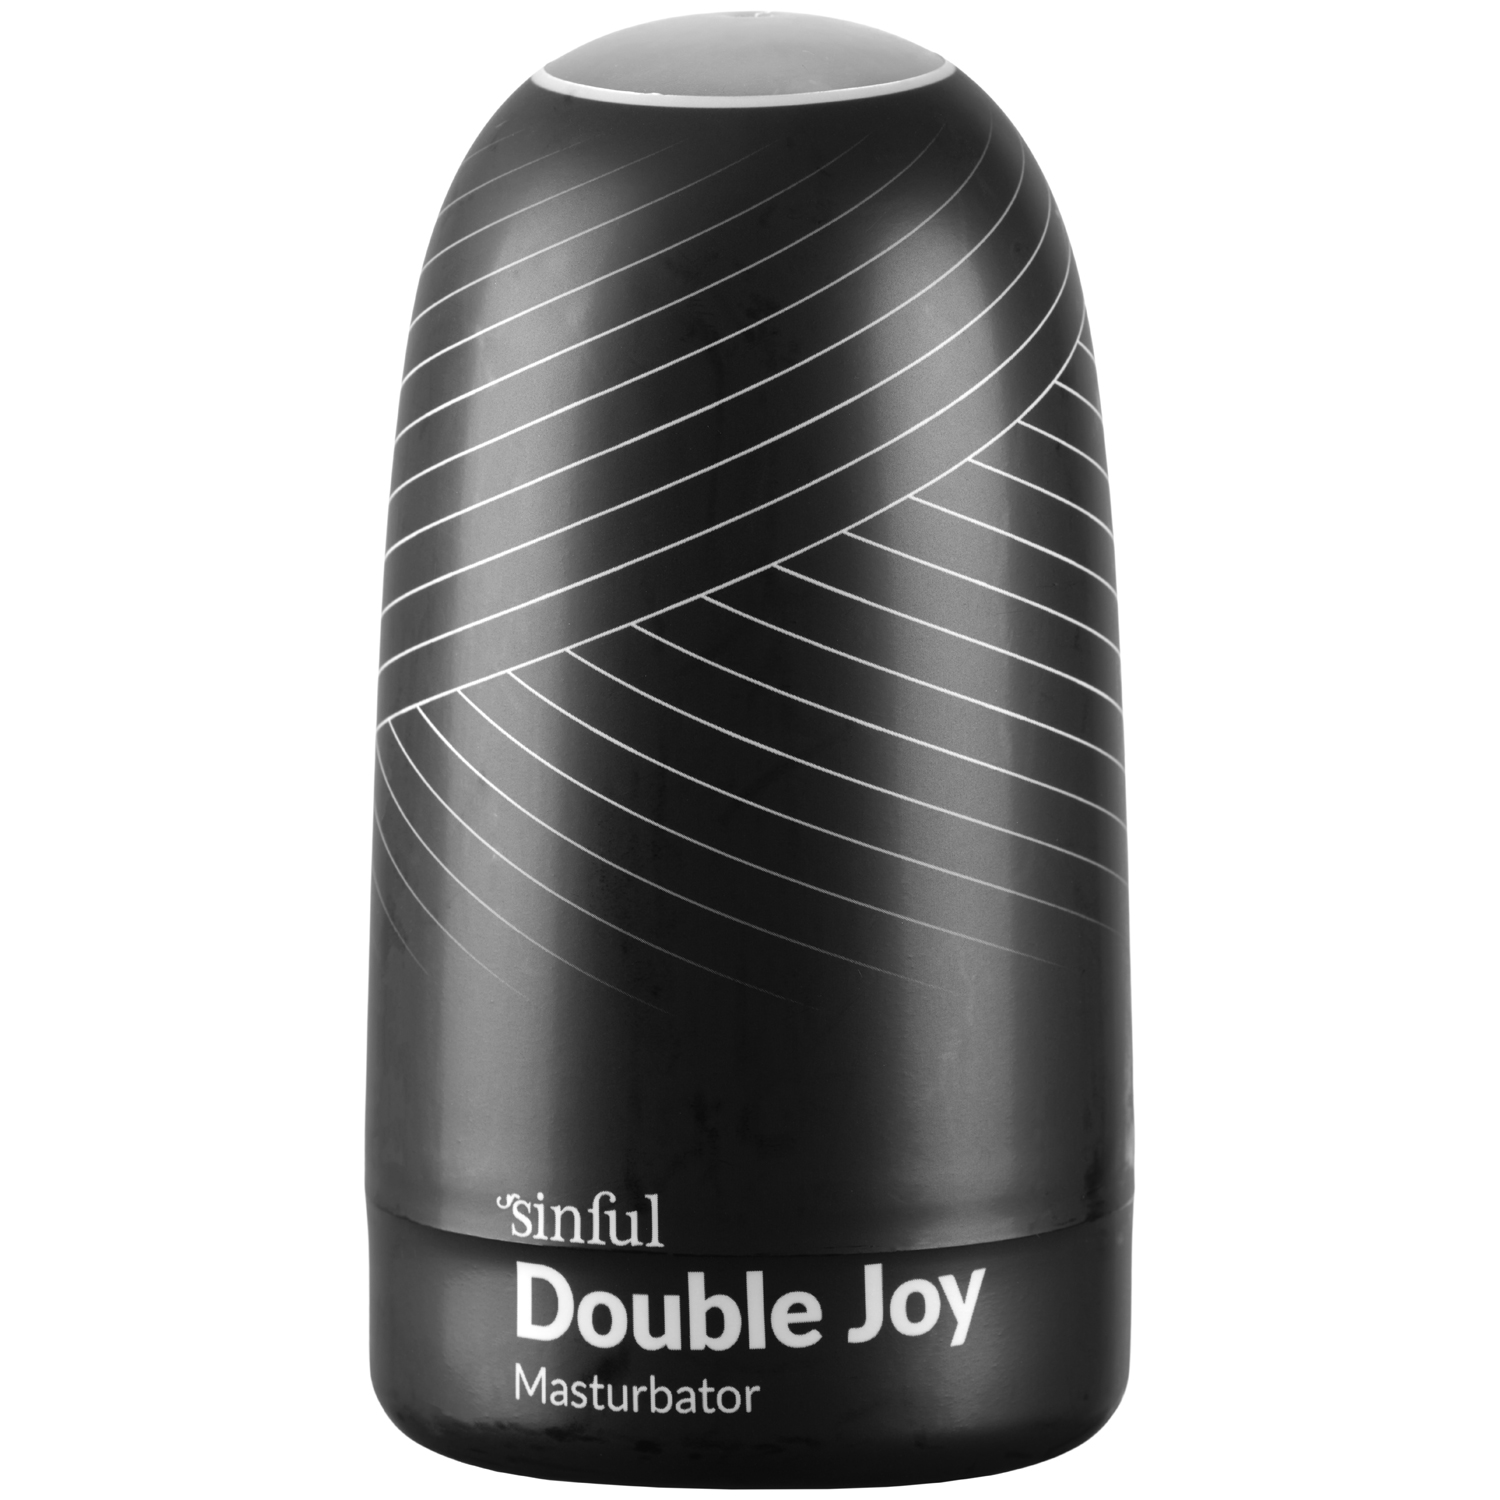 Sinful Double Joy Masturbator - Black